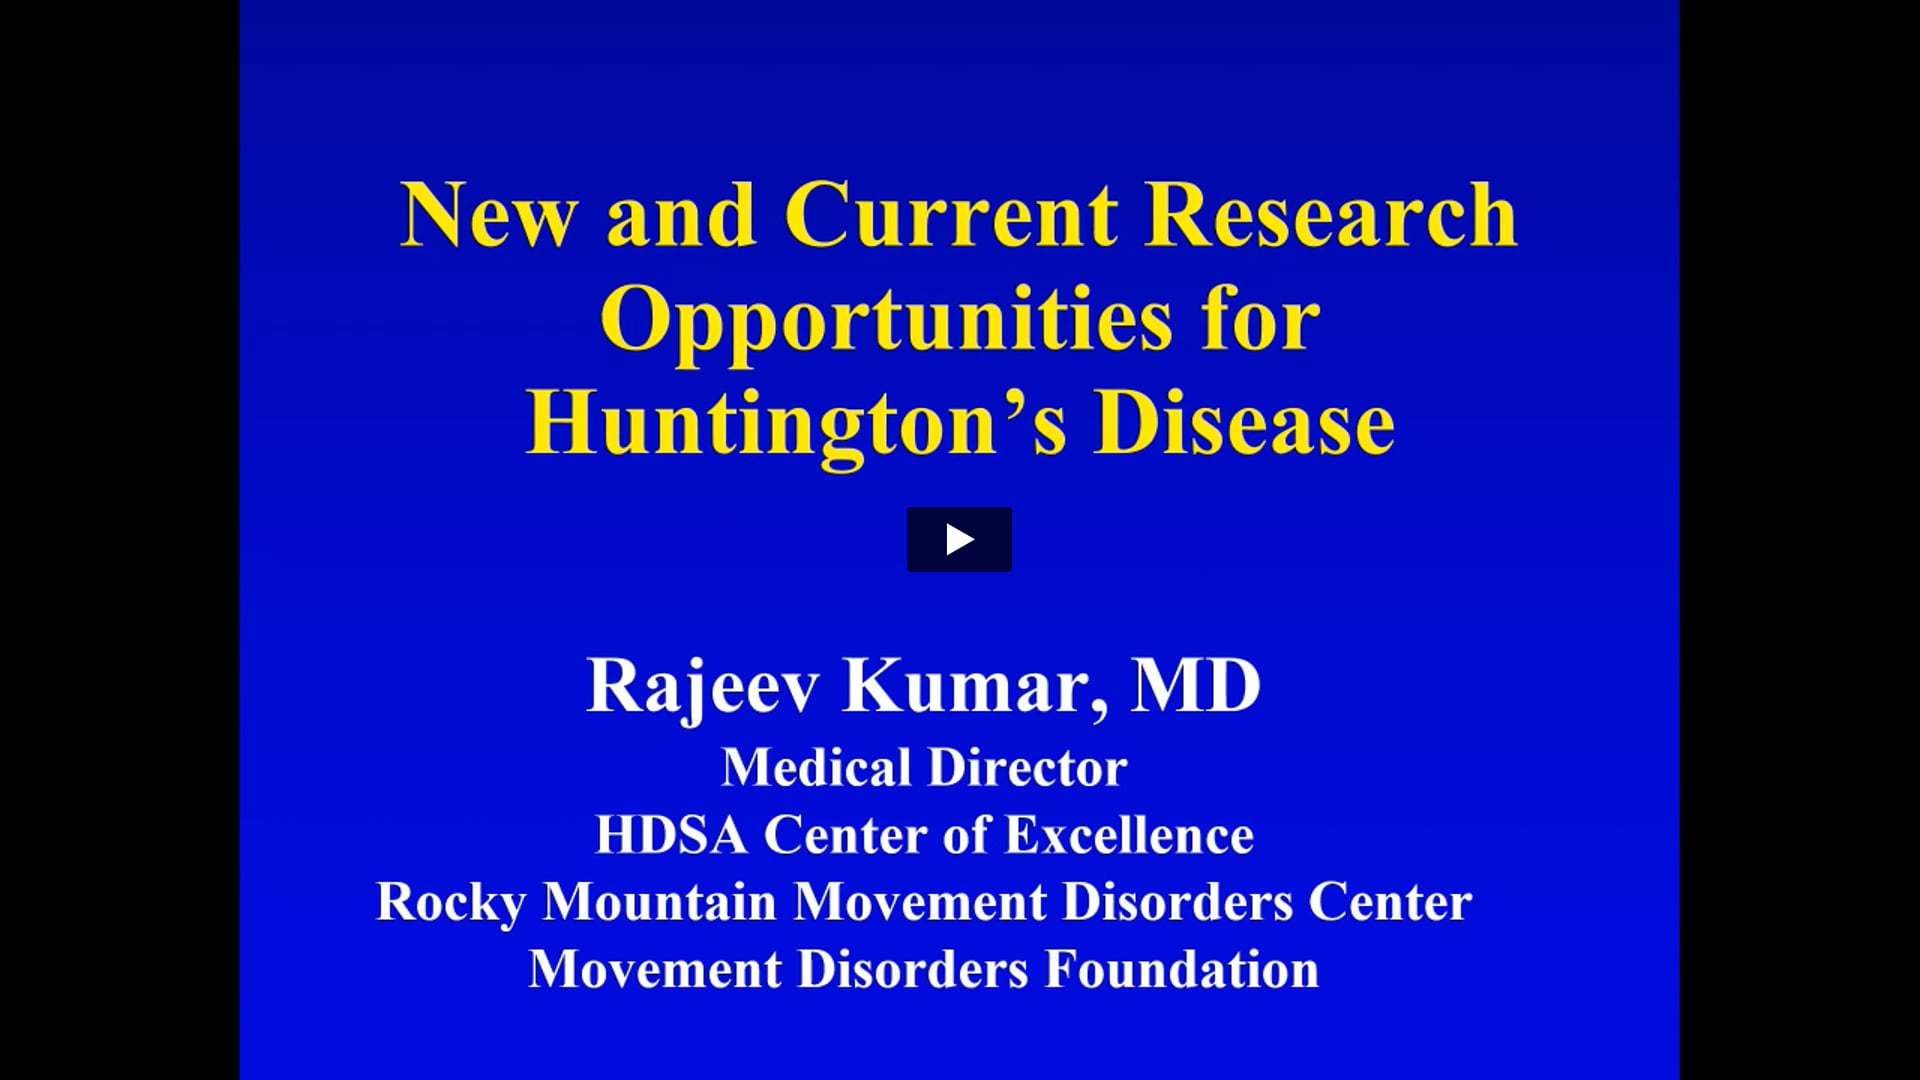 Dr. Rajeev Kumar, HD Education Day Video, Segment 3